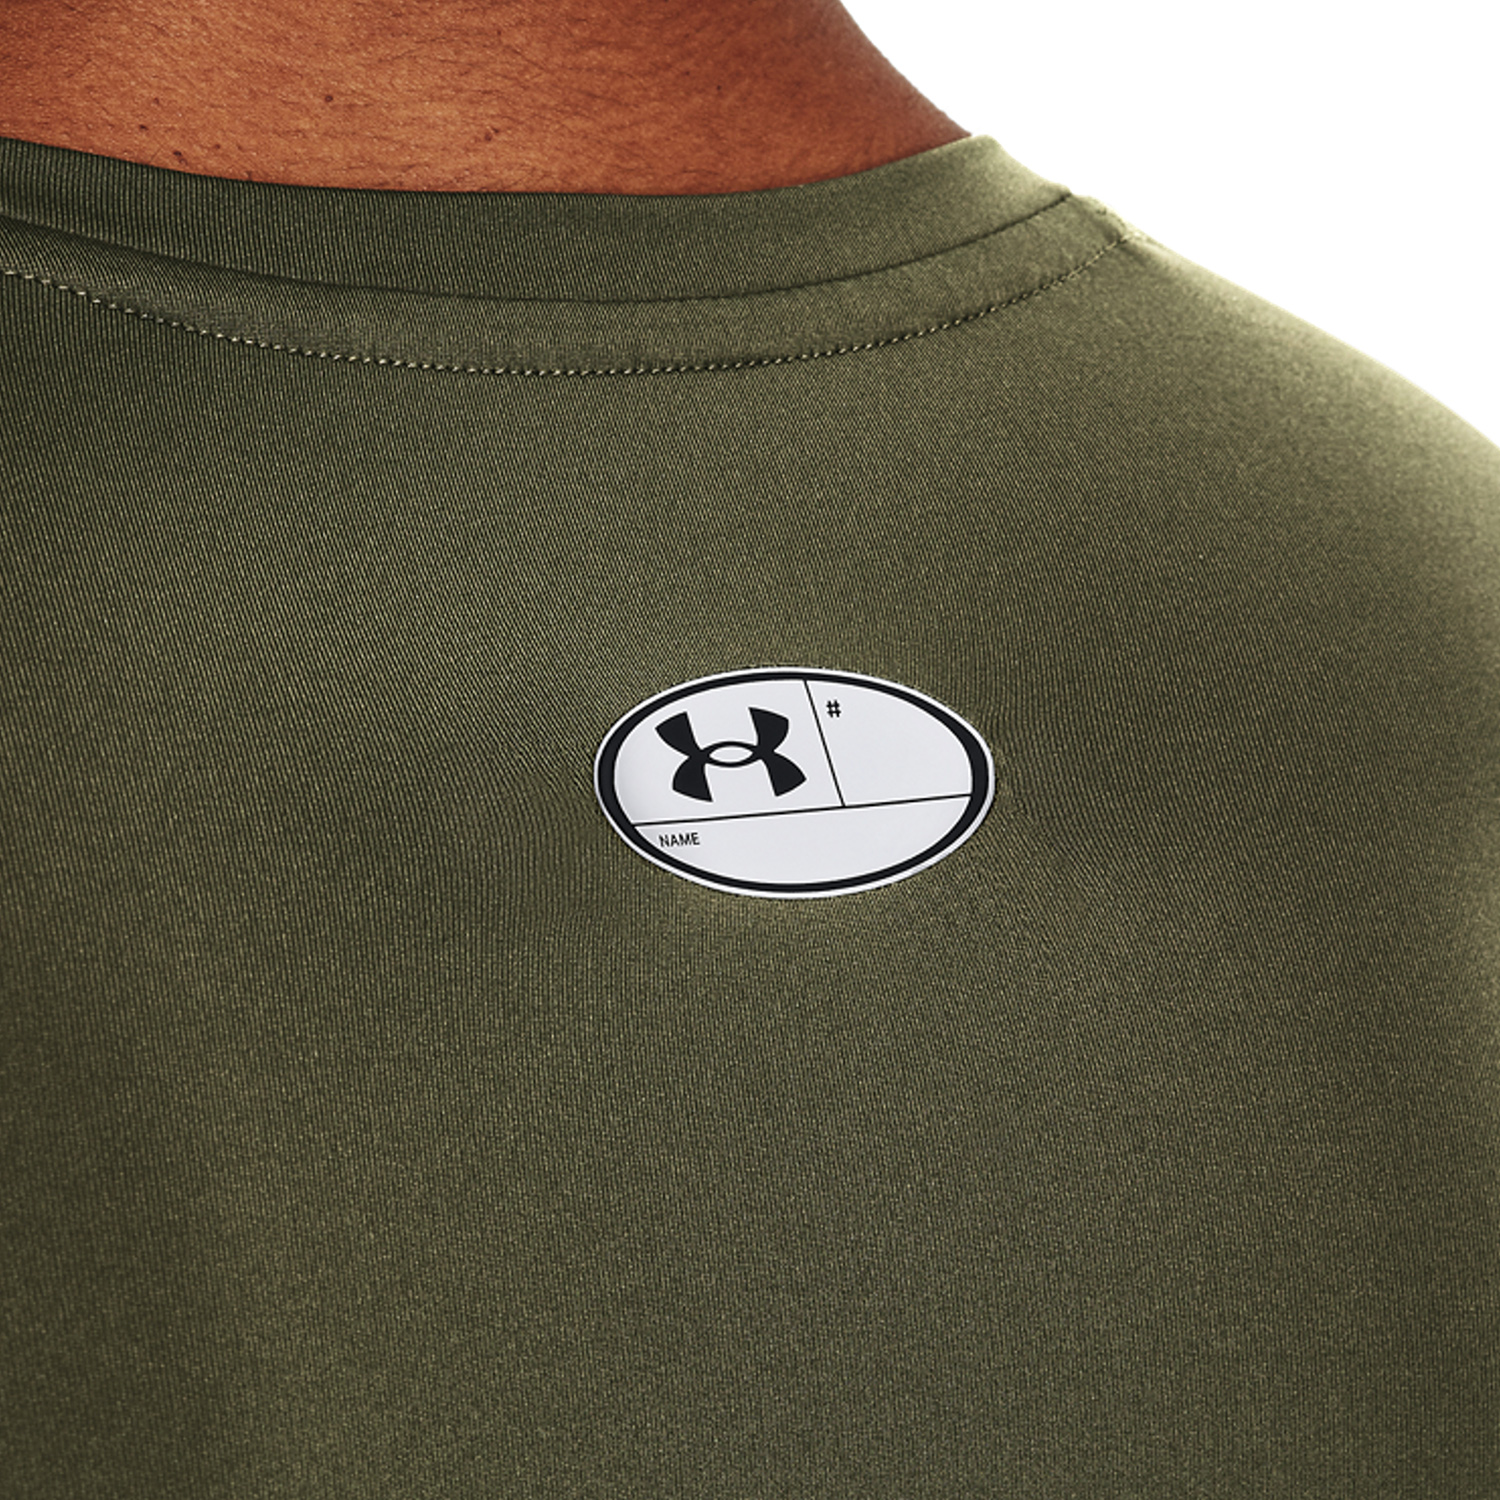 Under Armour HeatGear Compression Shirt - Marine OD Green/White